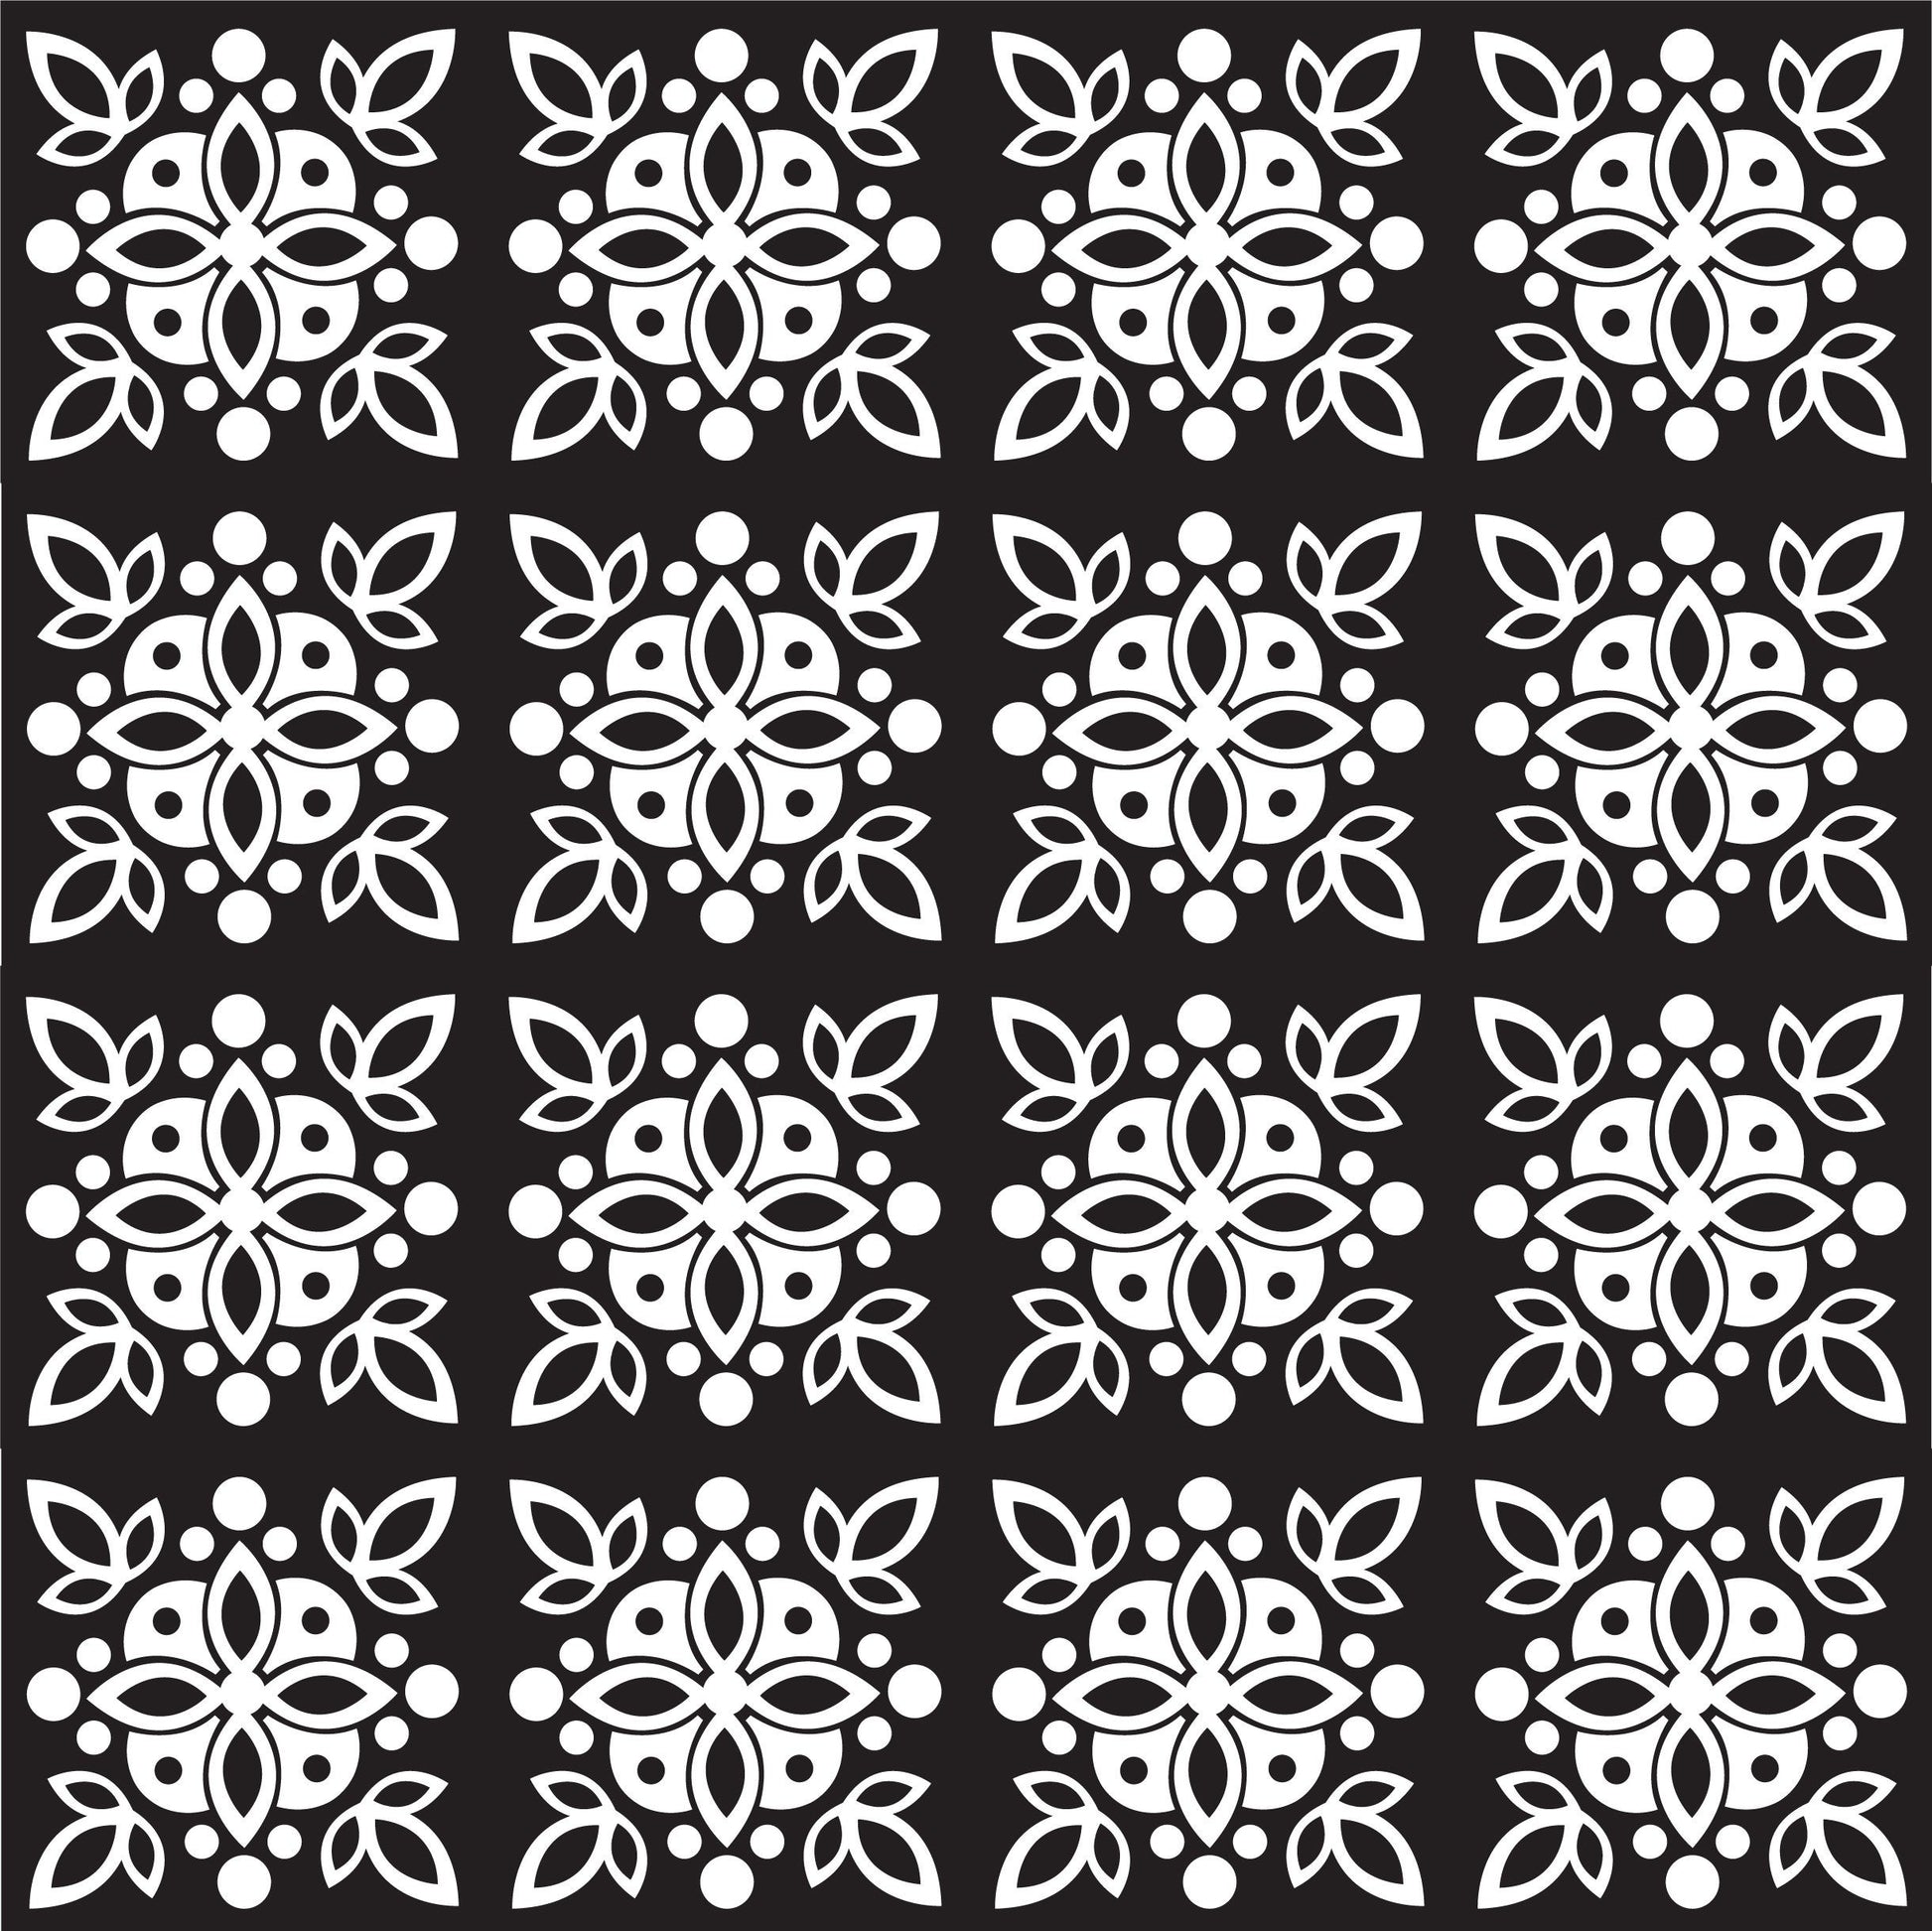 Black & White Vintage Floral Tile Stickers